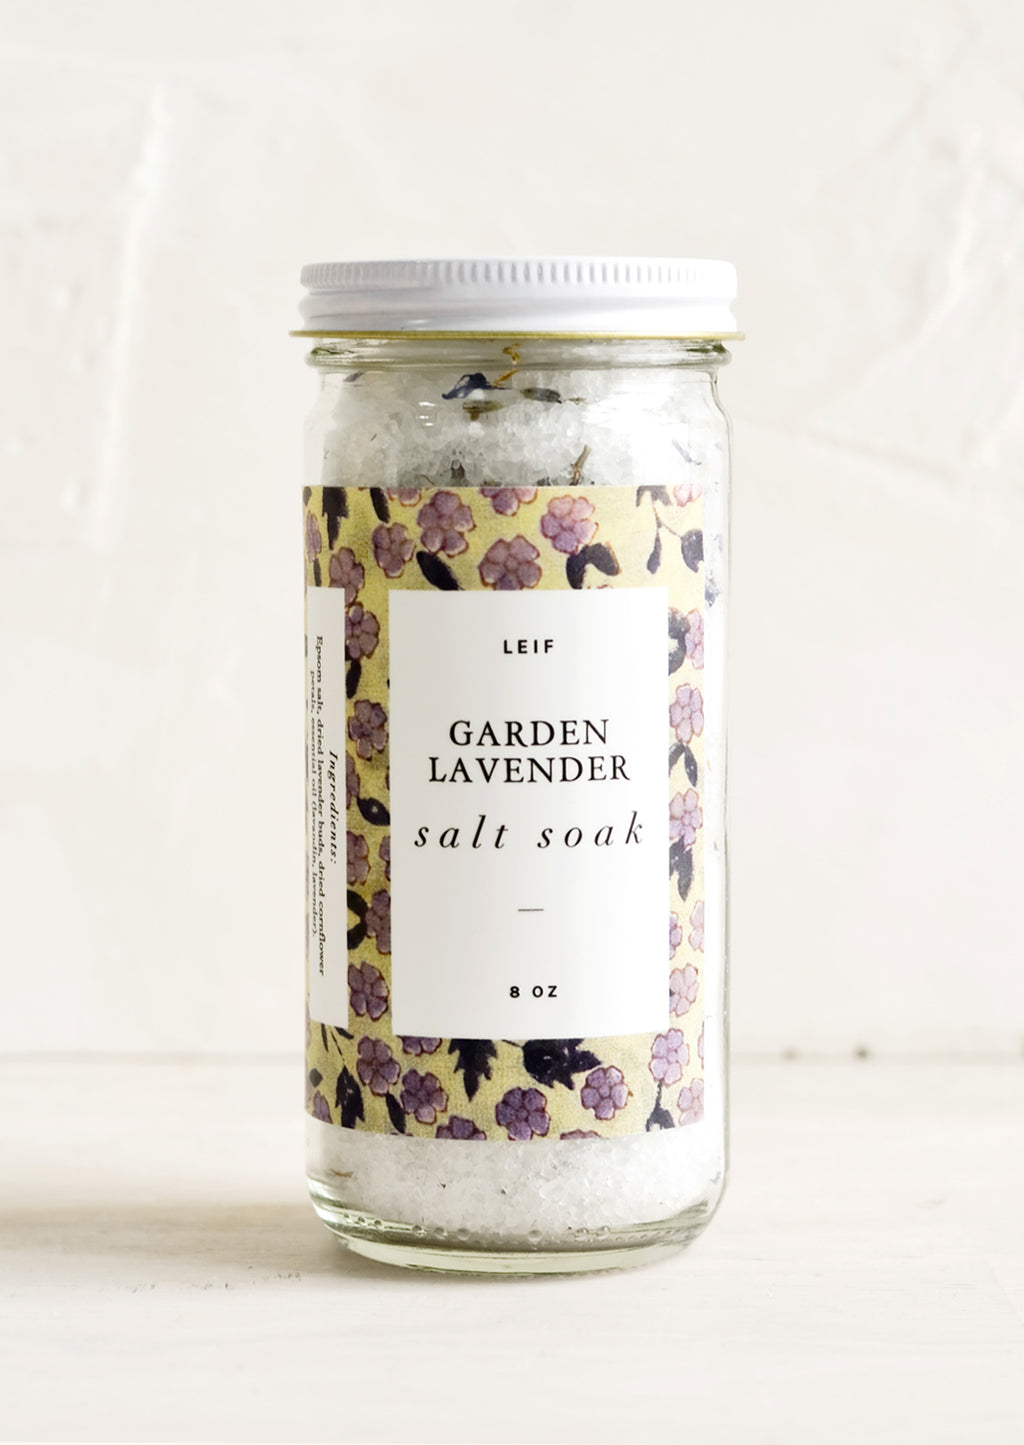 Garden Lavender: A straight sided glass jar containing Garden Lavender salt soak.